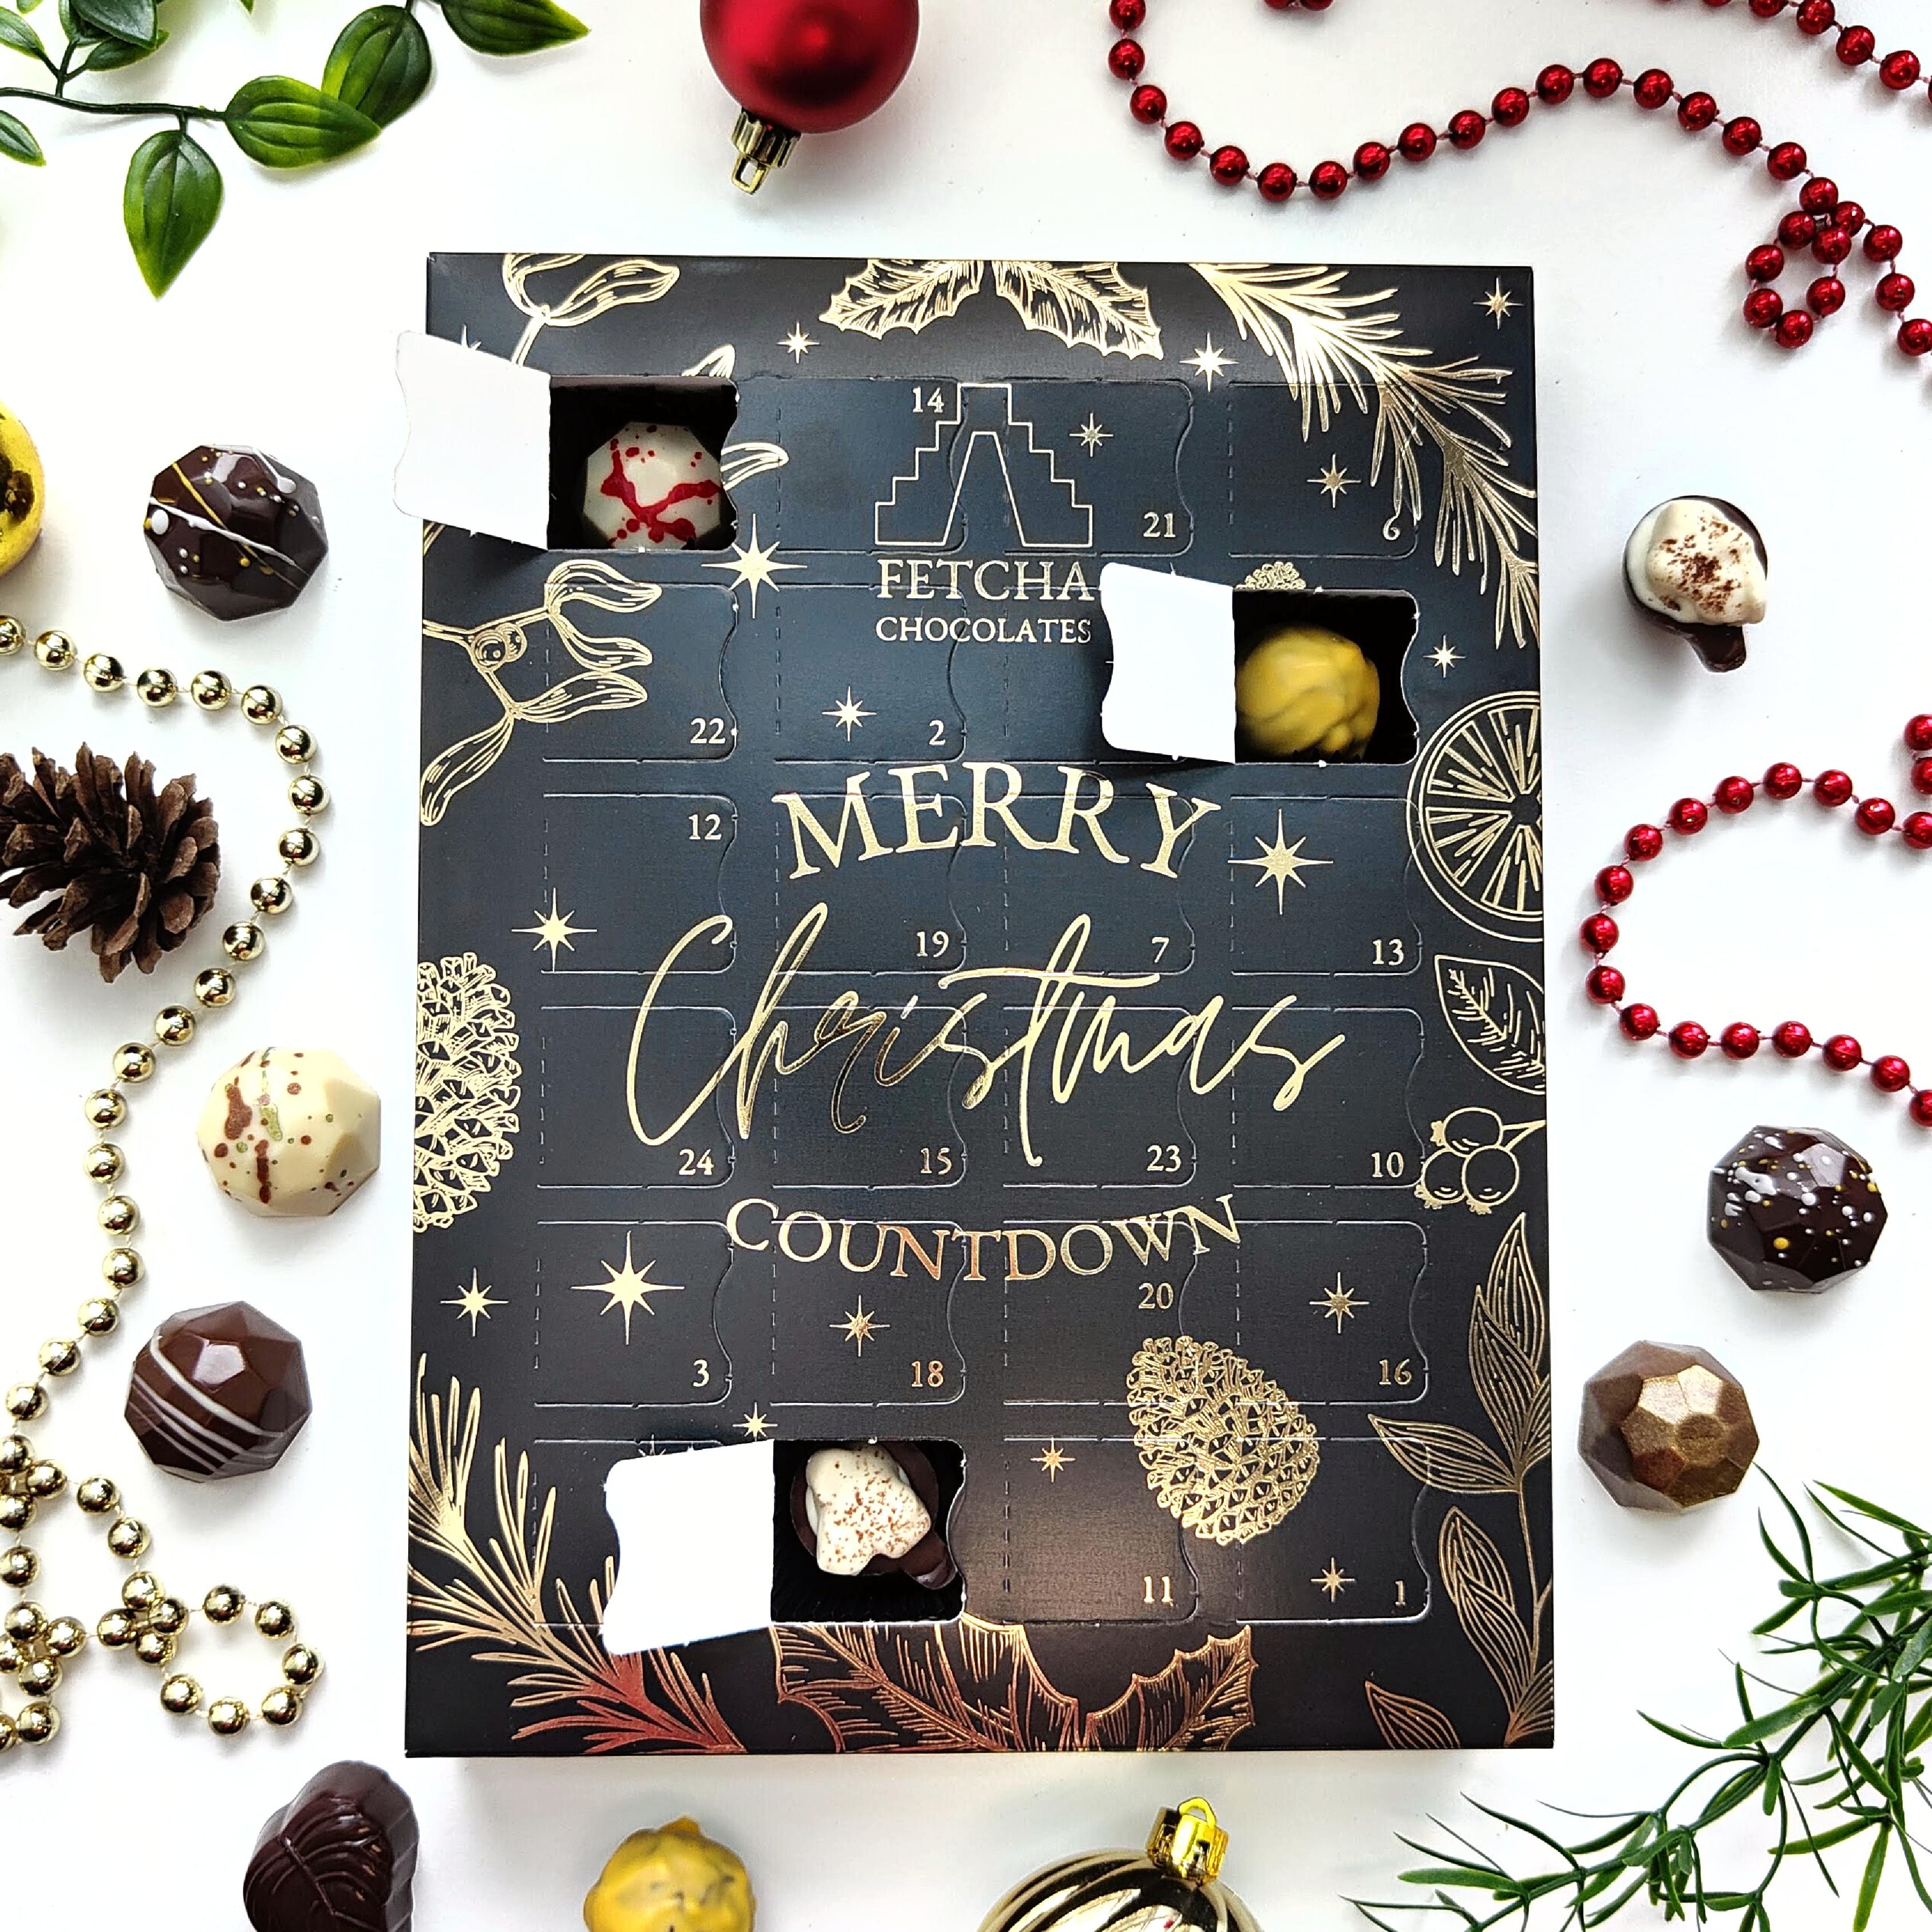 Fetcha Chocolates Luxury Vegan Advent Calendar - Inhalt Content (EN)